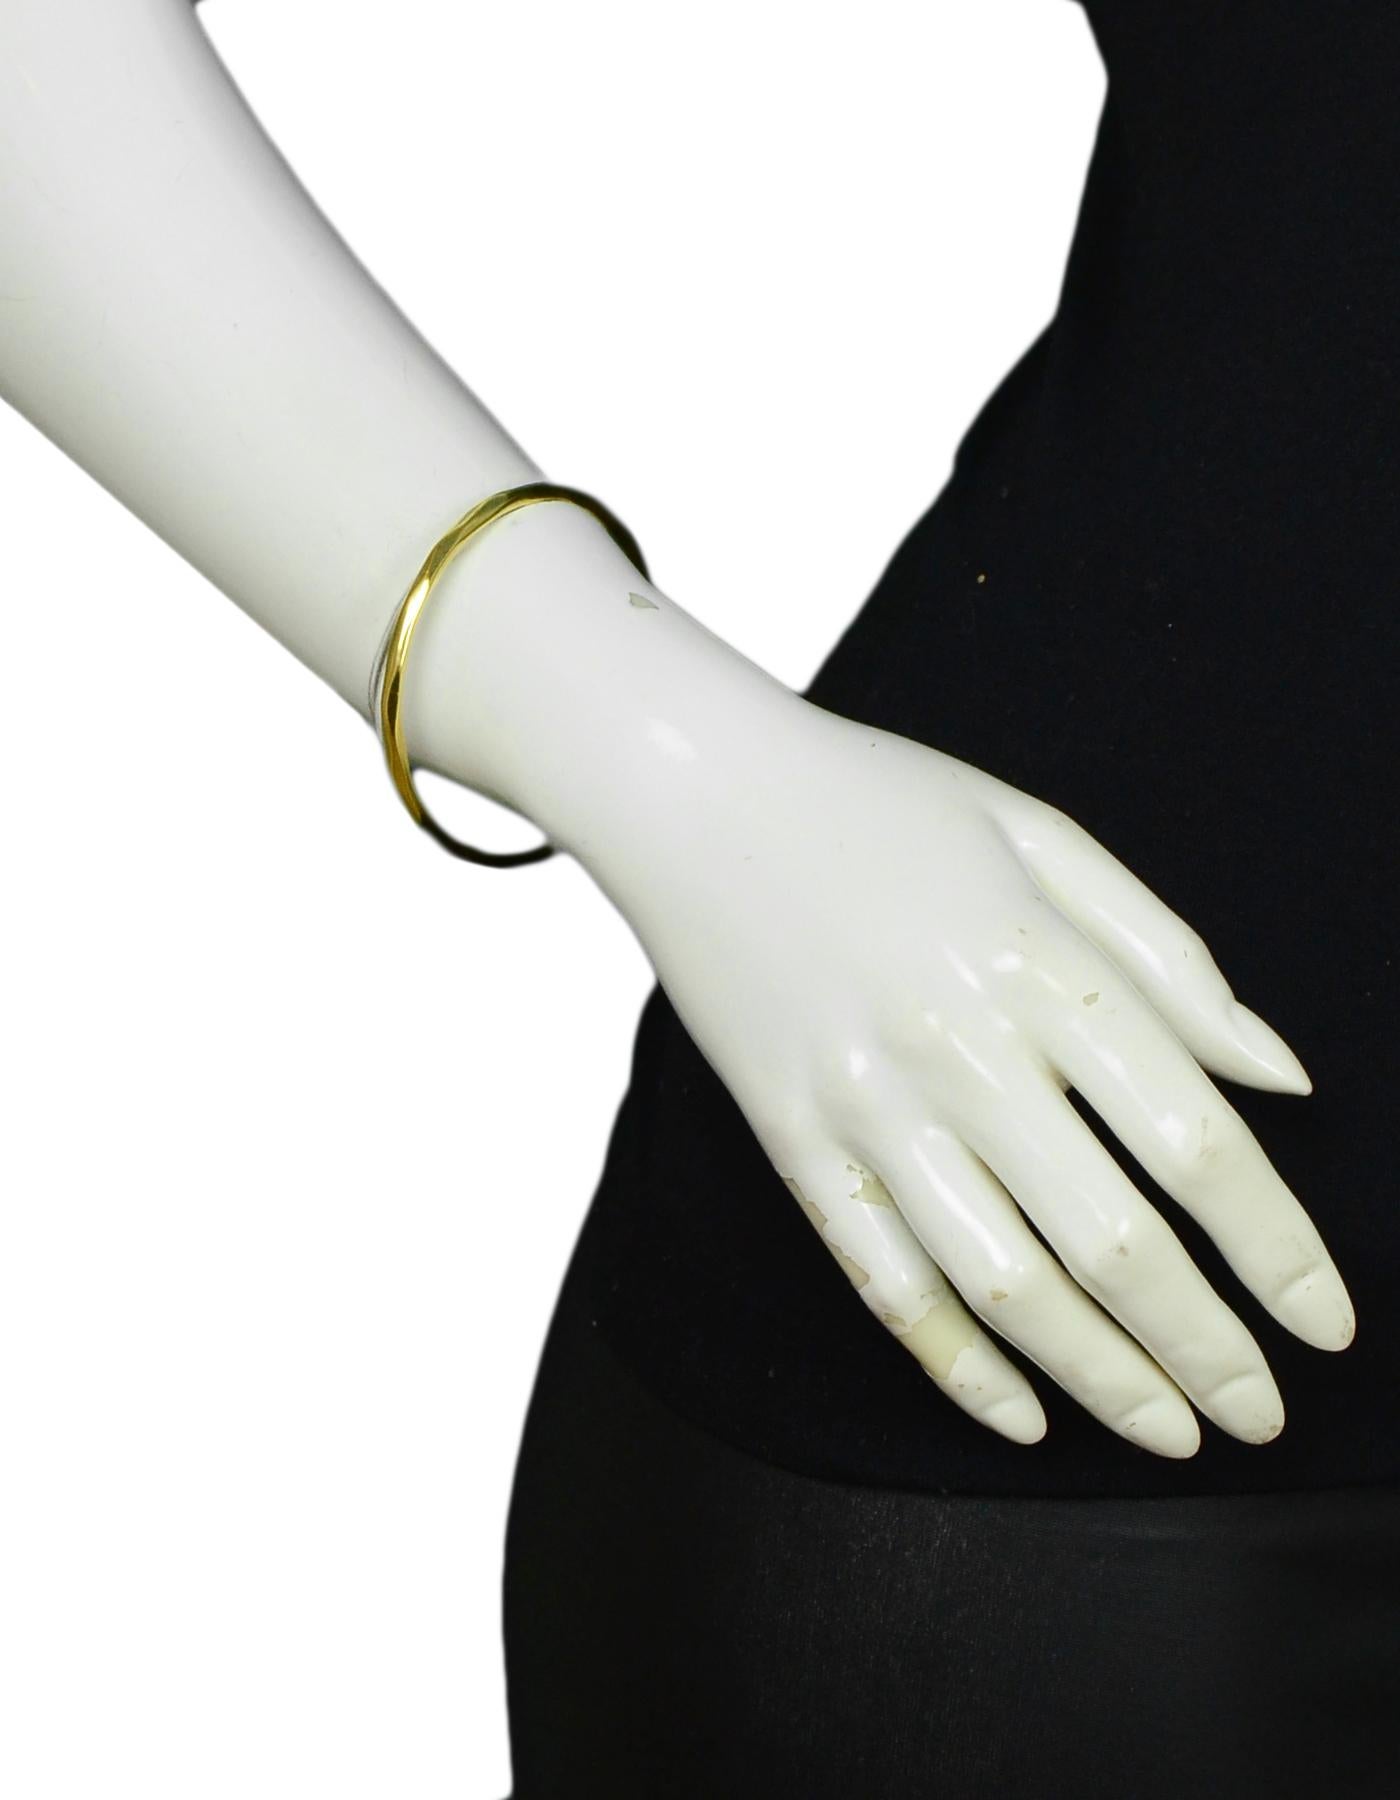 Ippolita 18k Gold Classico Faceted Bangle Bracelet 7.5